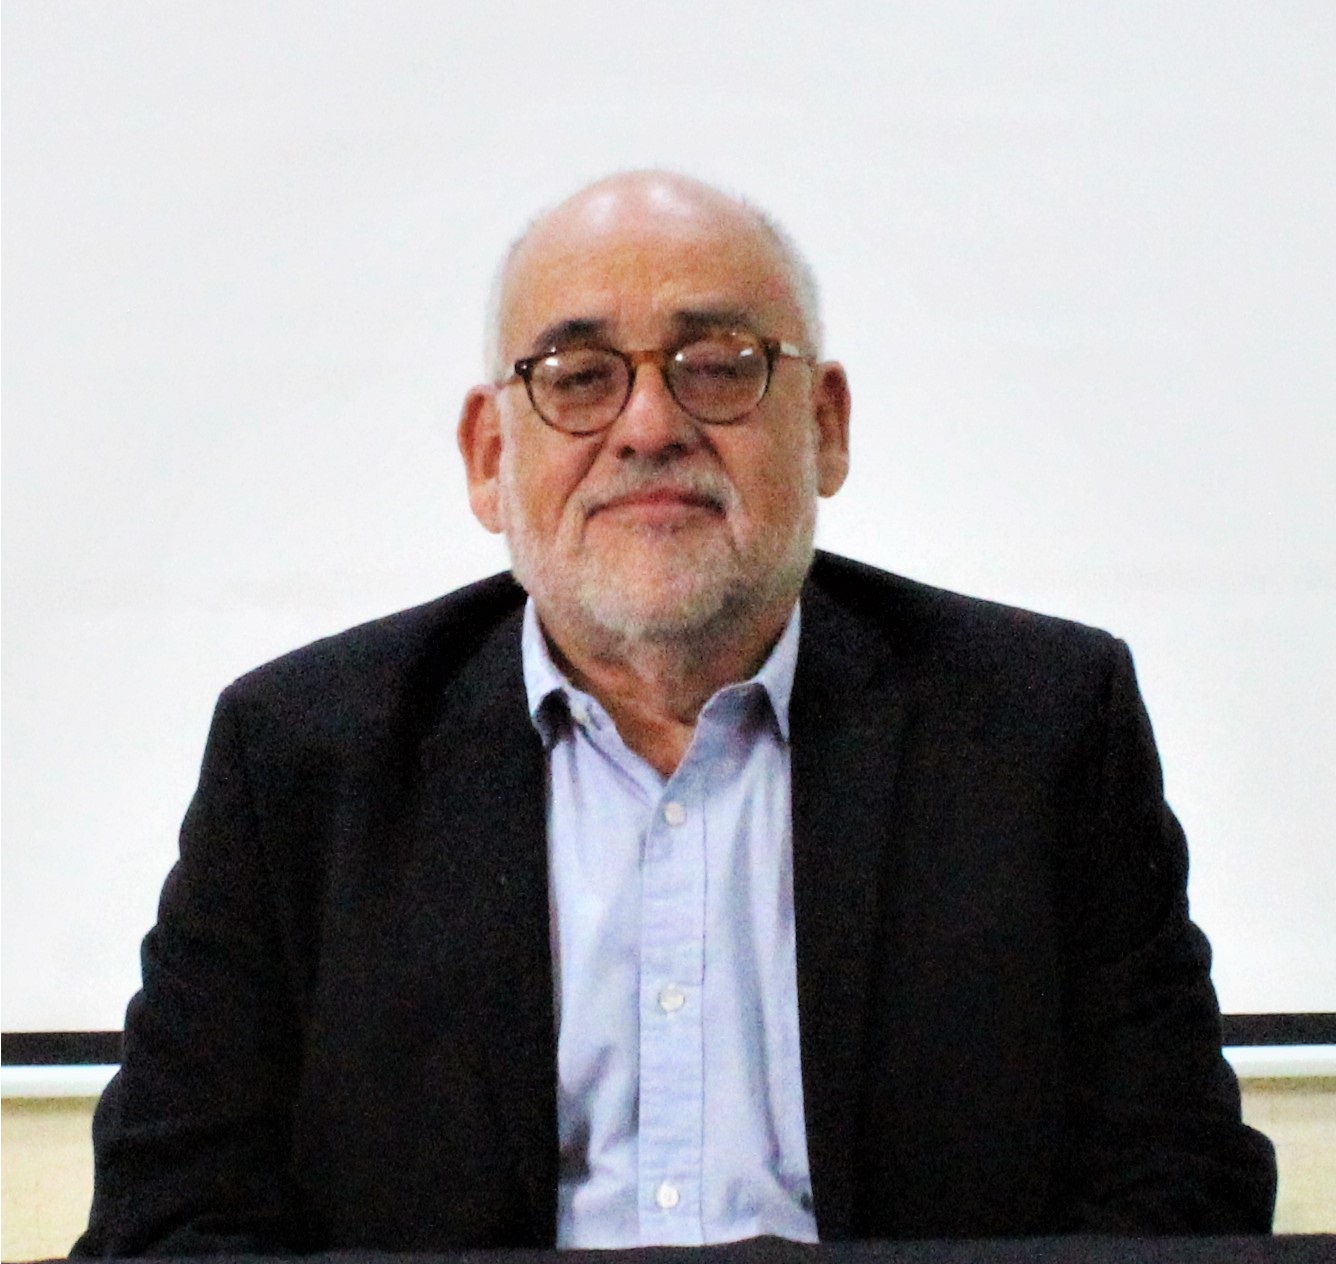 Dr. Francisco Valdes Perezgasga